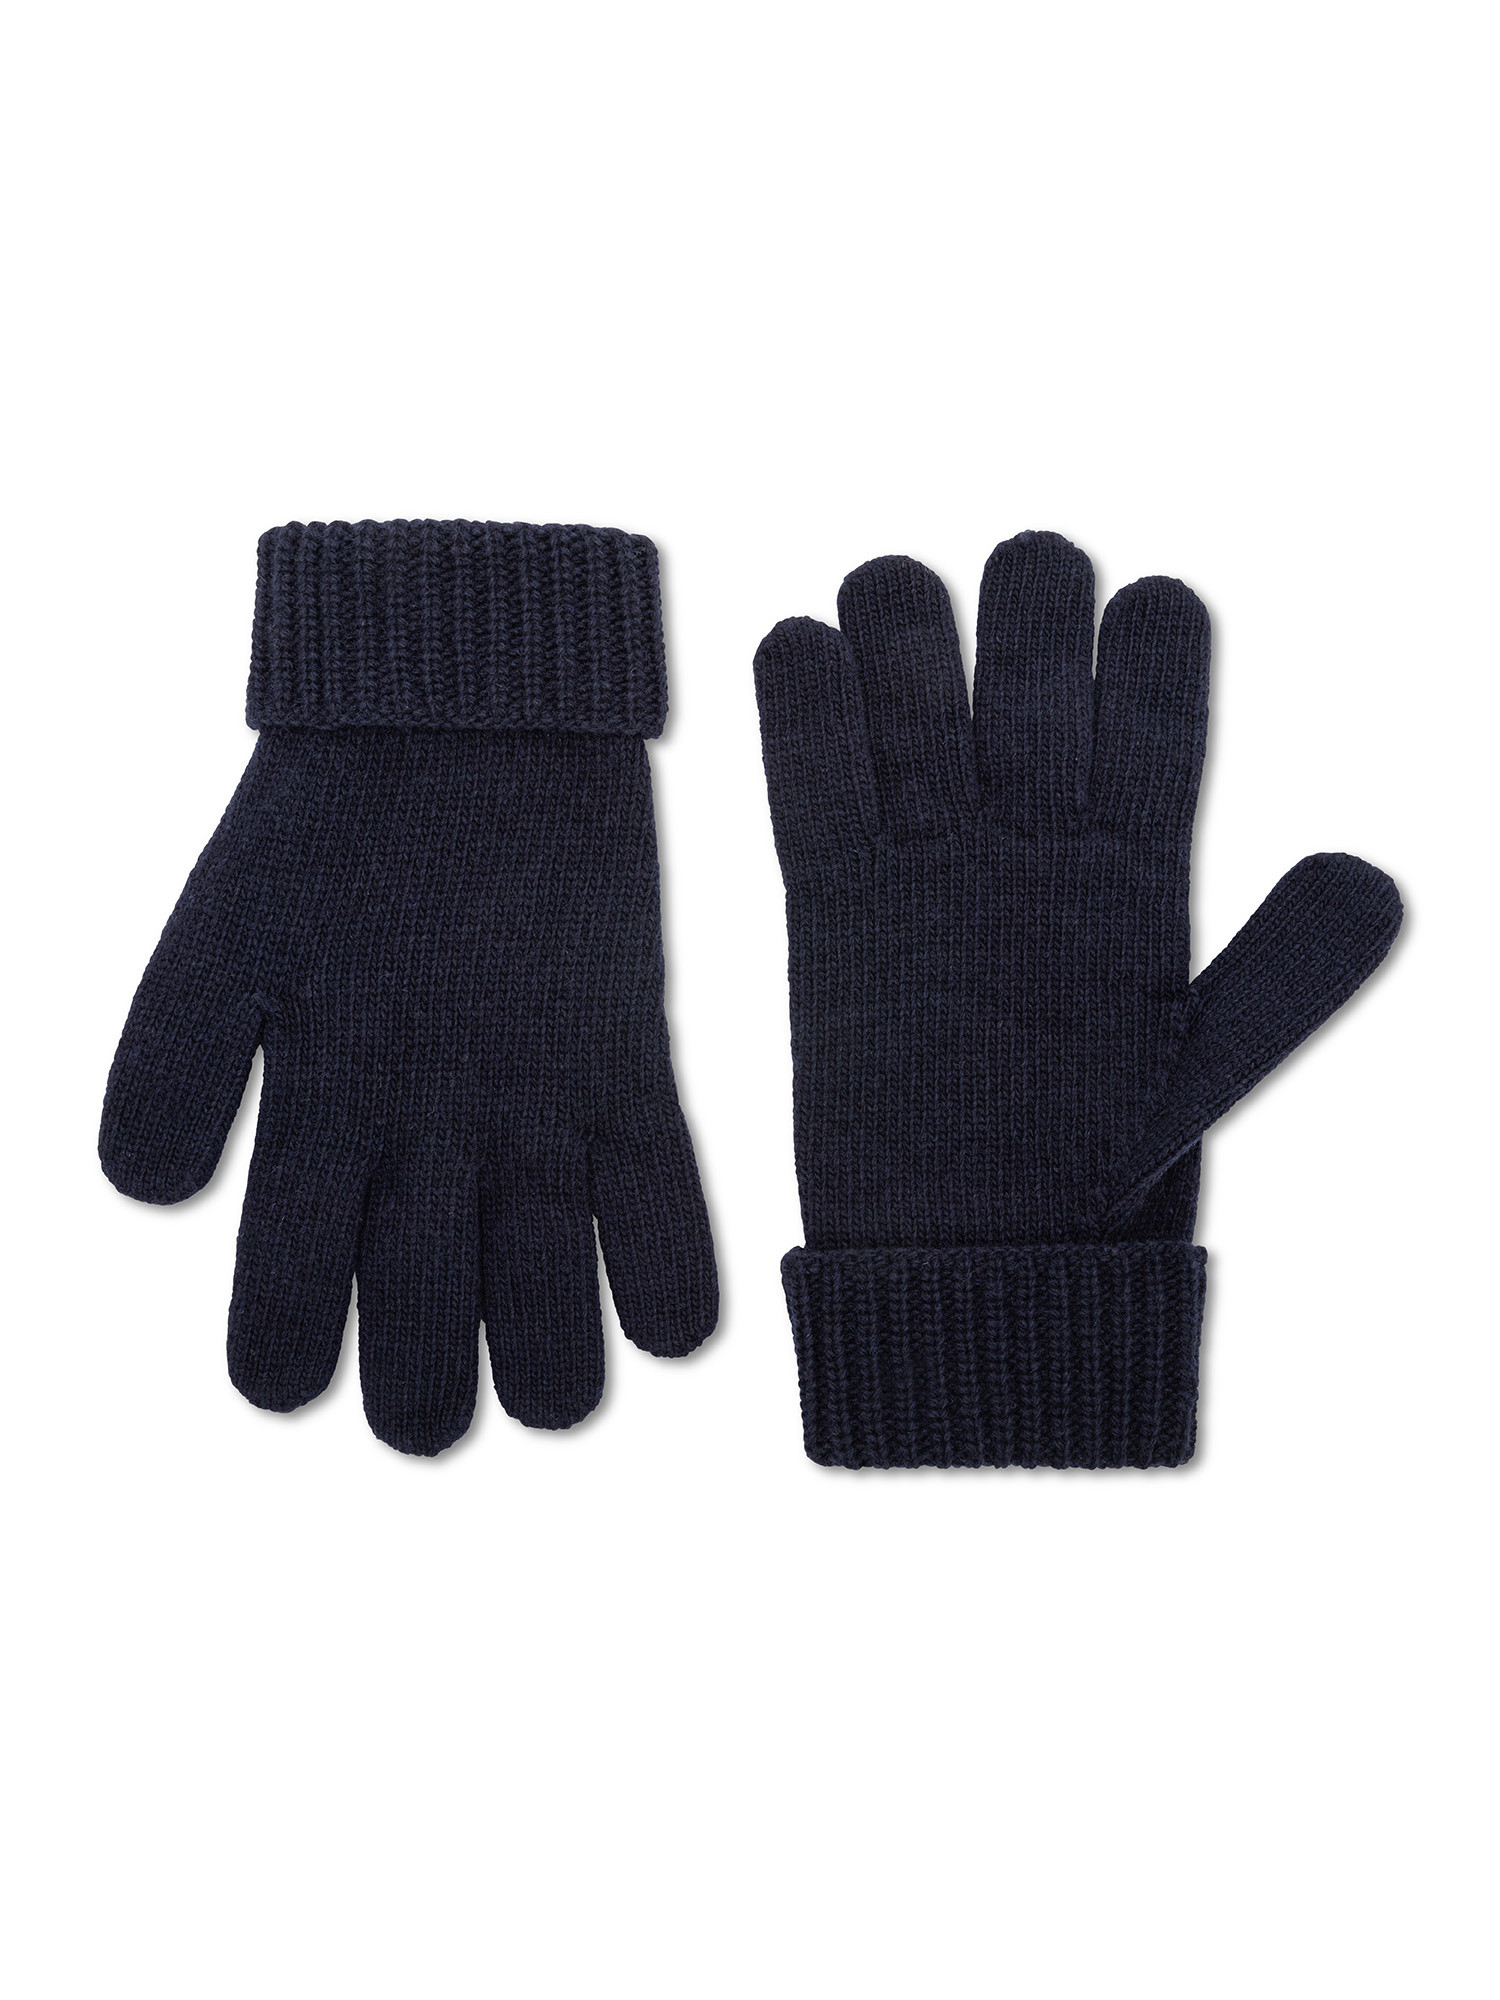 Armani Exchange - Gloves in recycled wool blend, Dark Blue, large image number 0